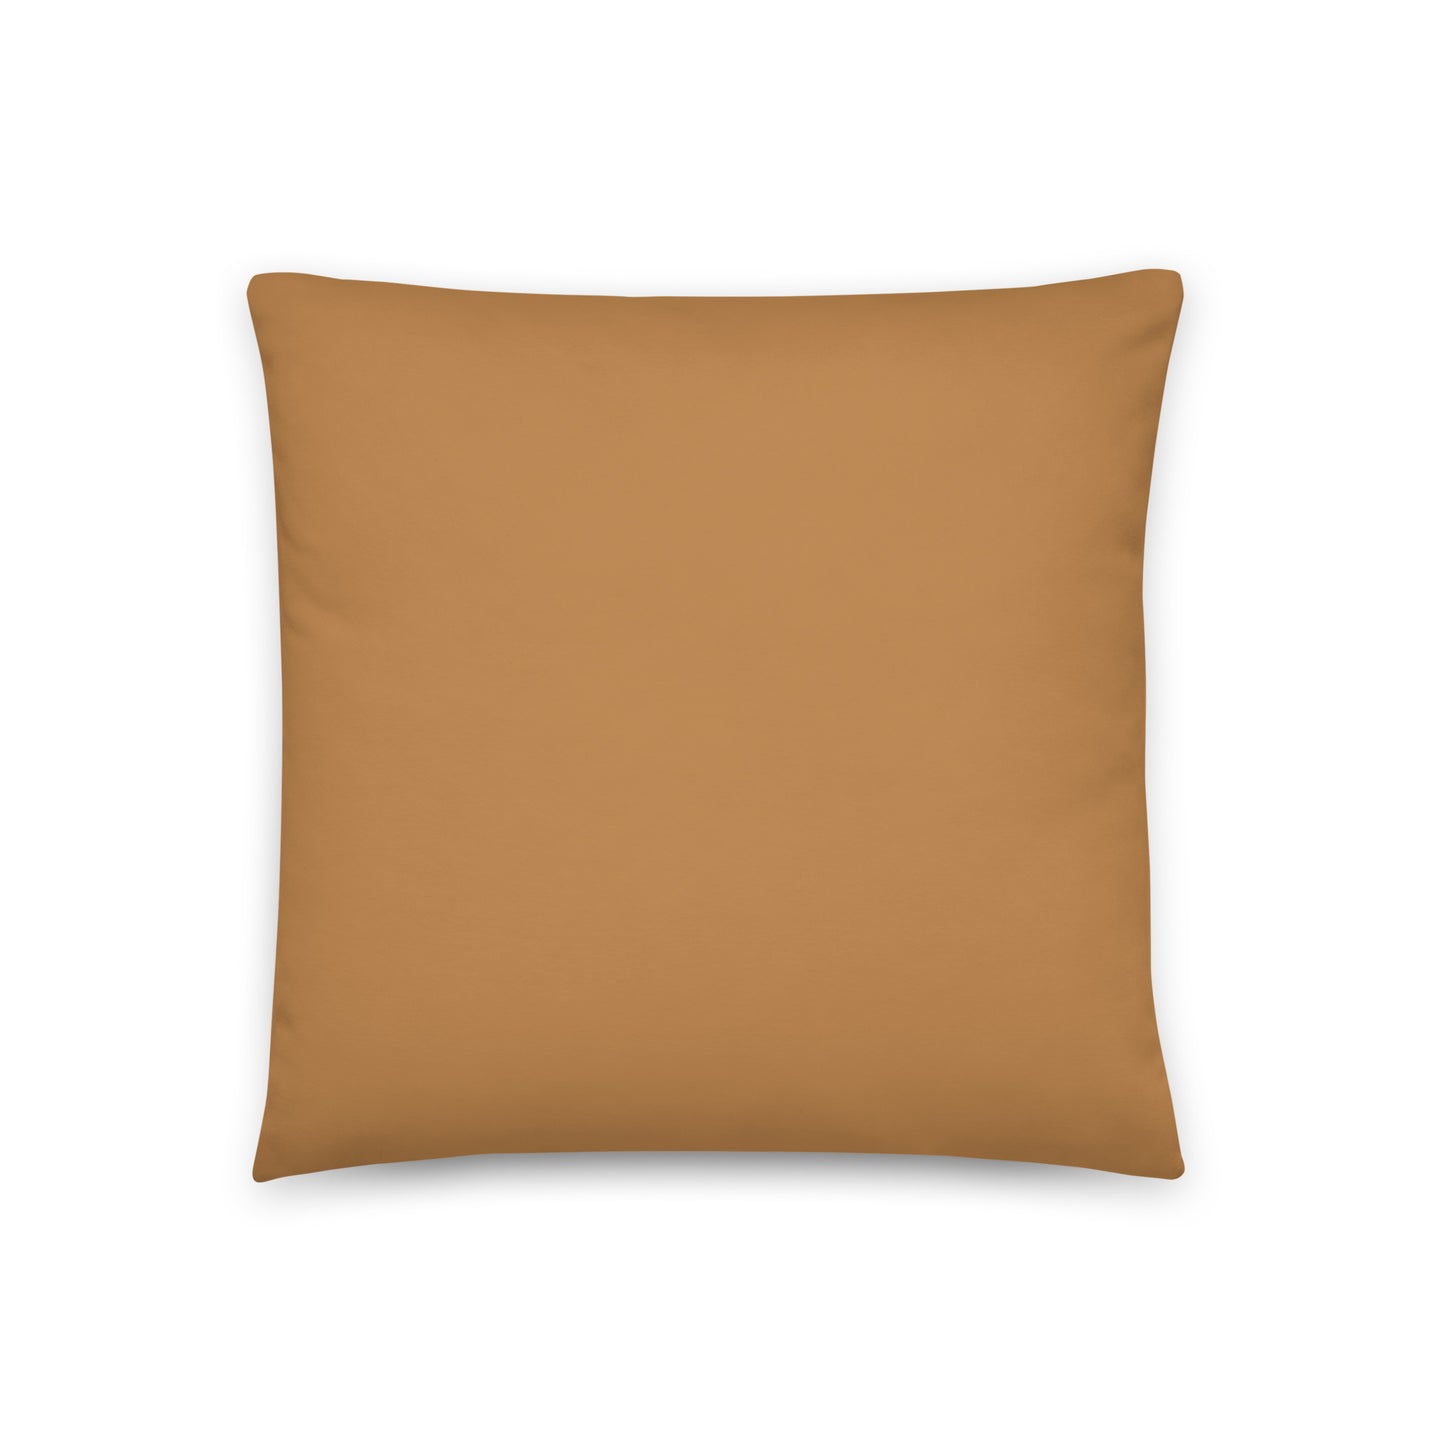 Basic Caramel - Sustainably Made Pillows